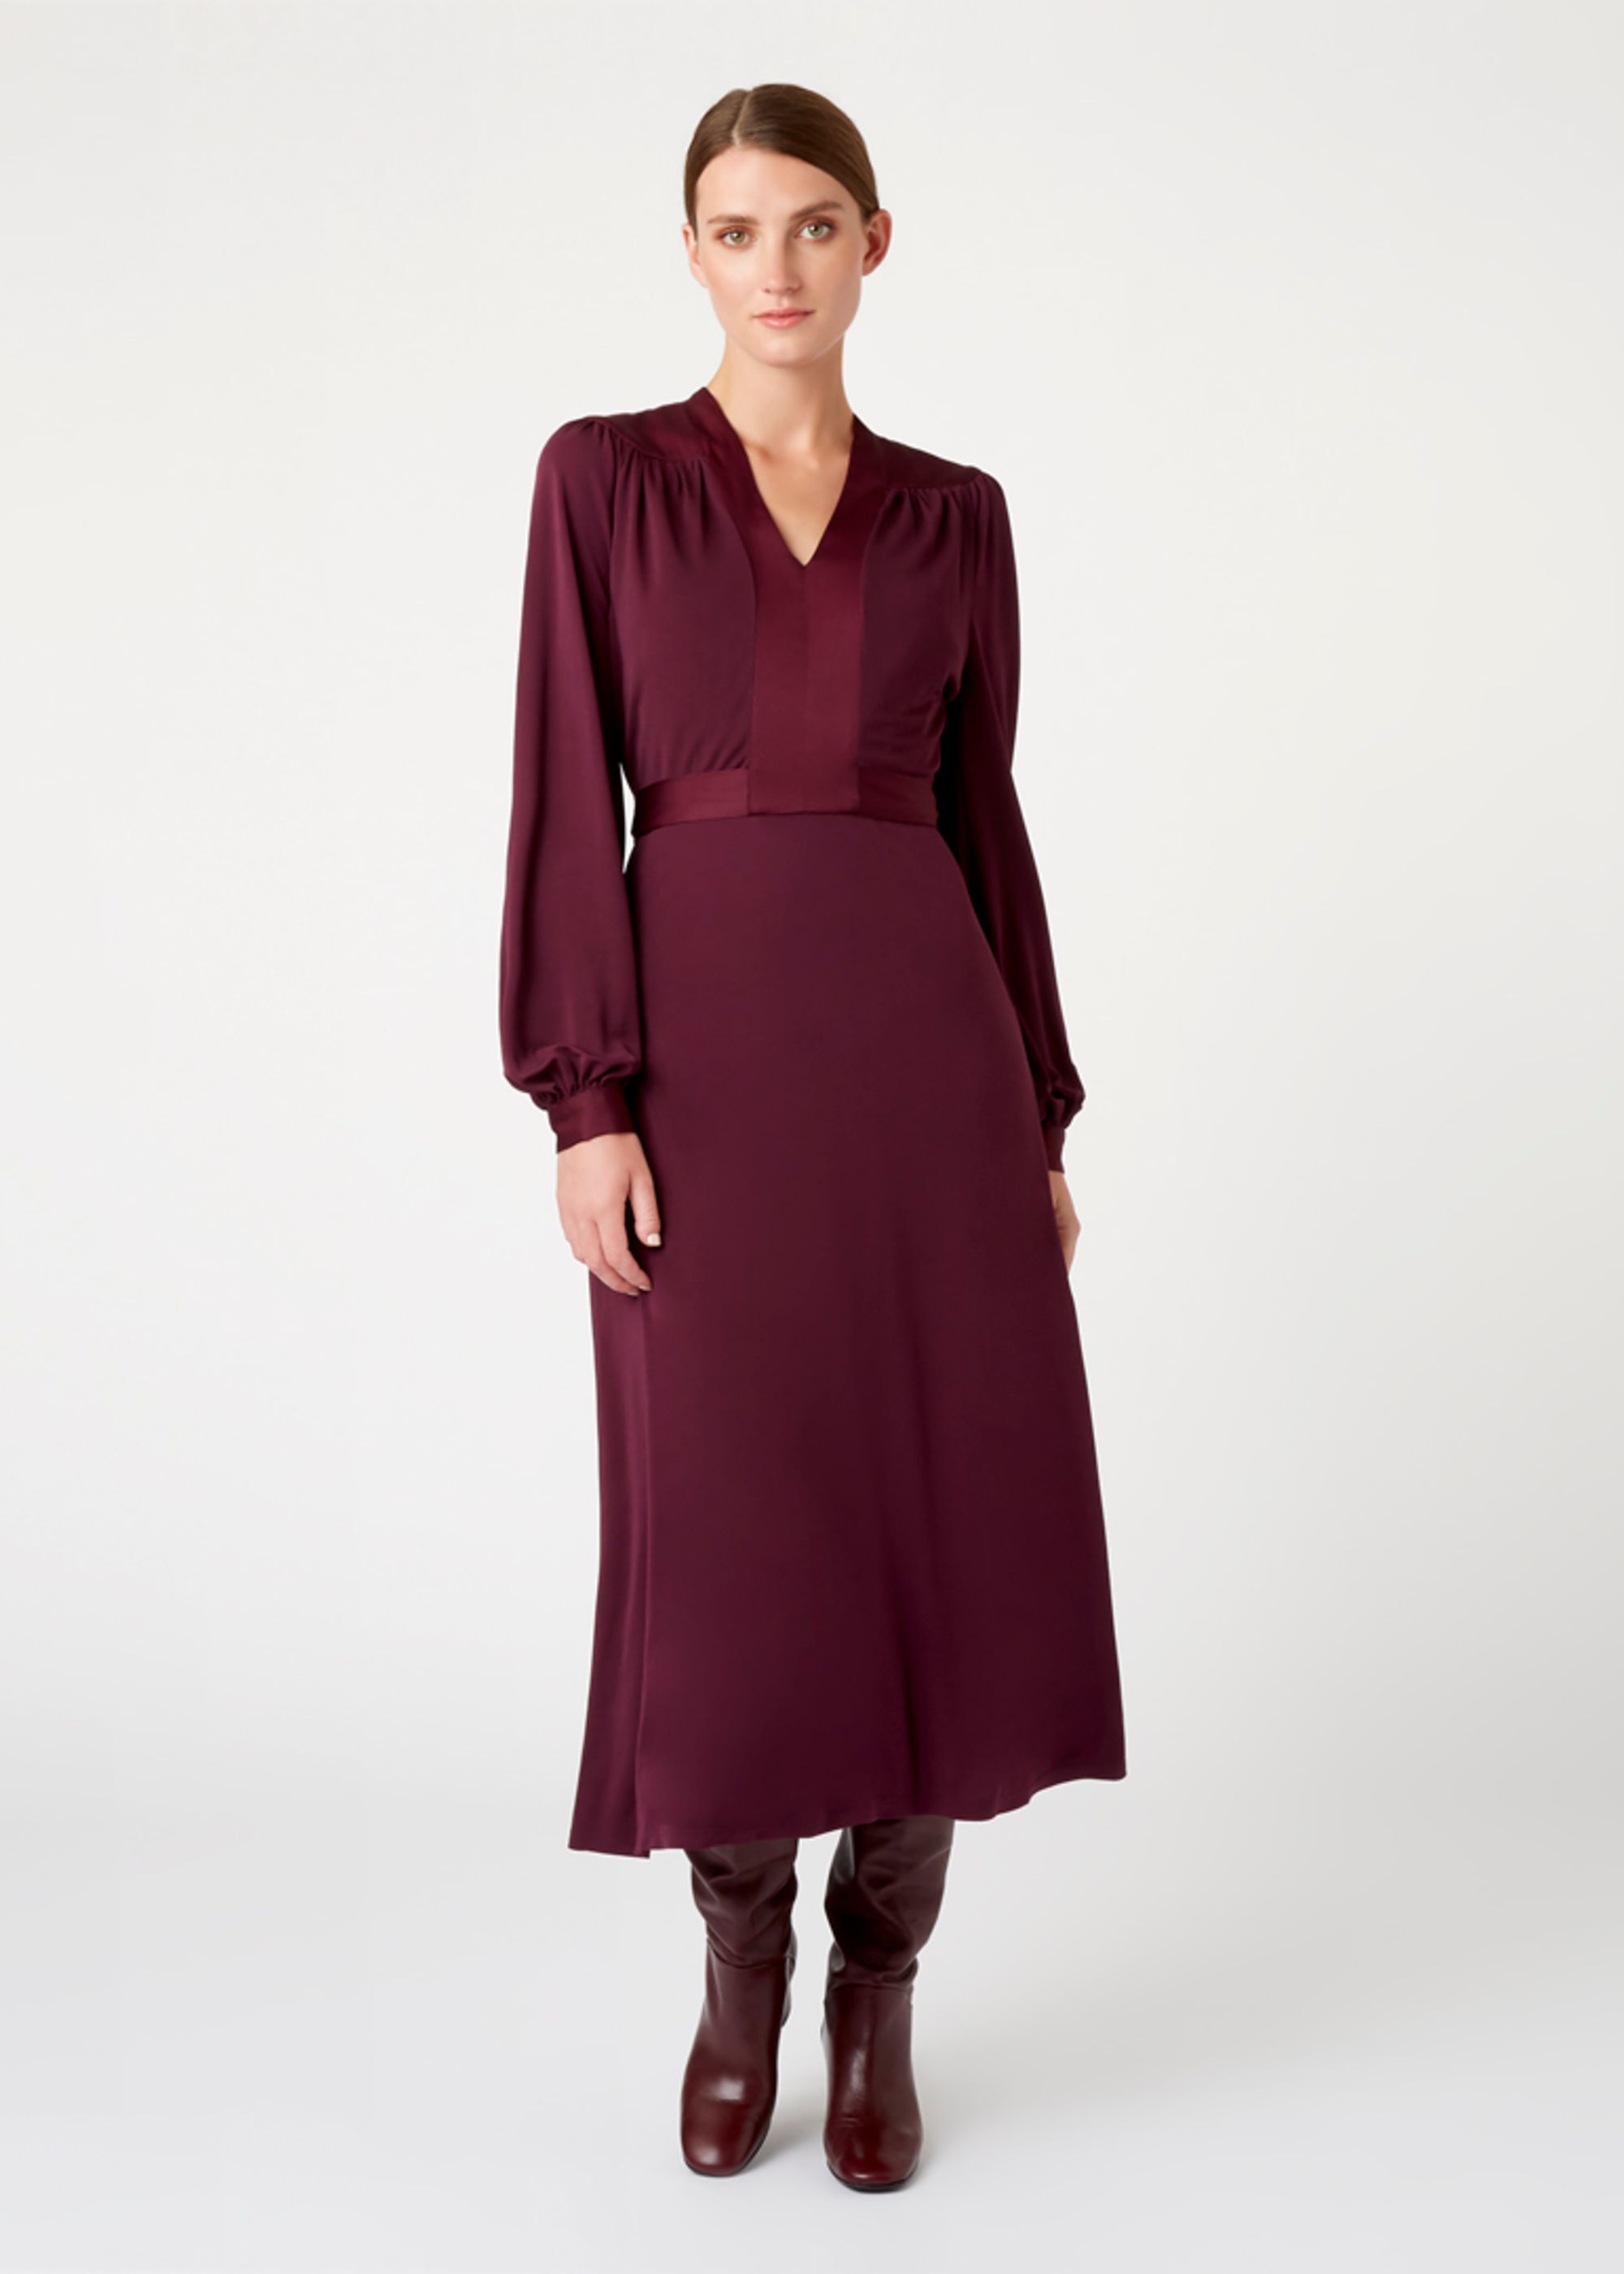 hobbs burgundy dress